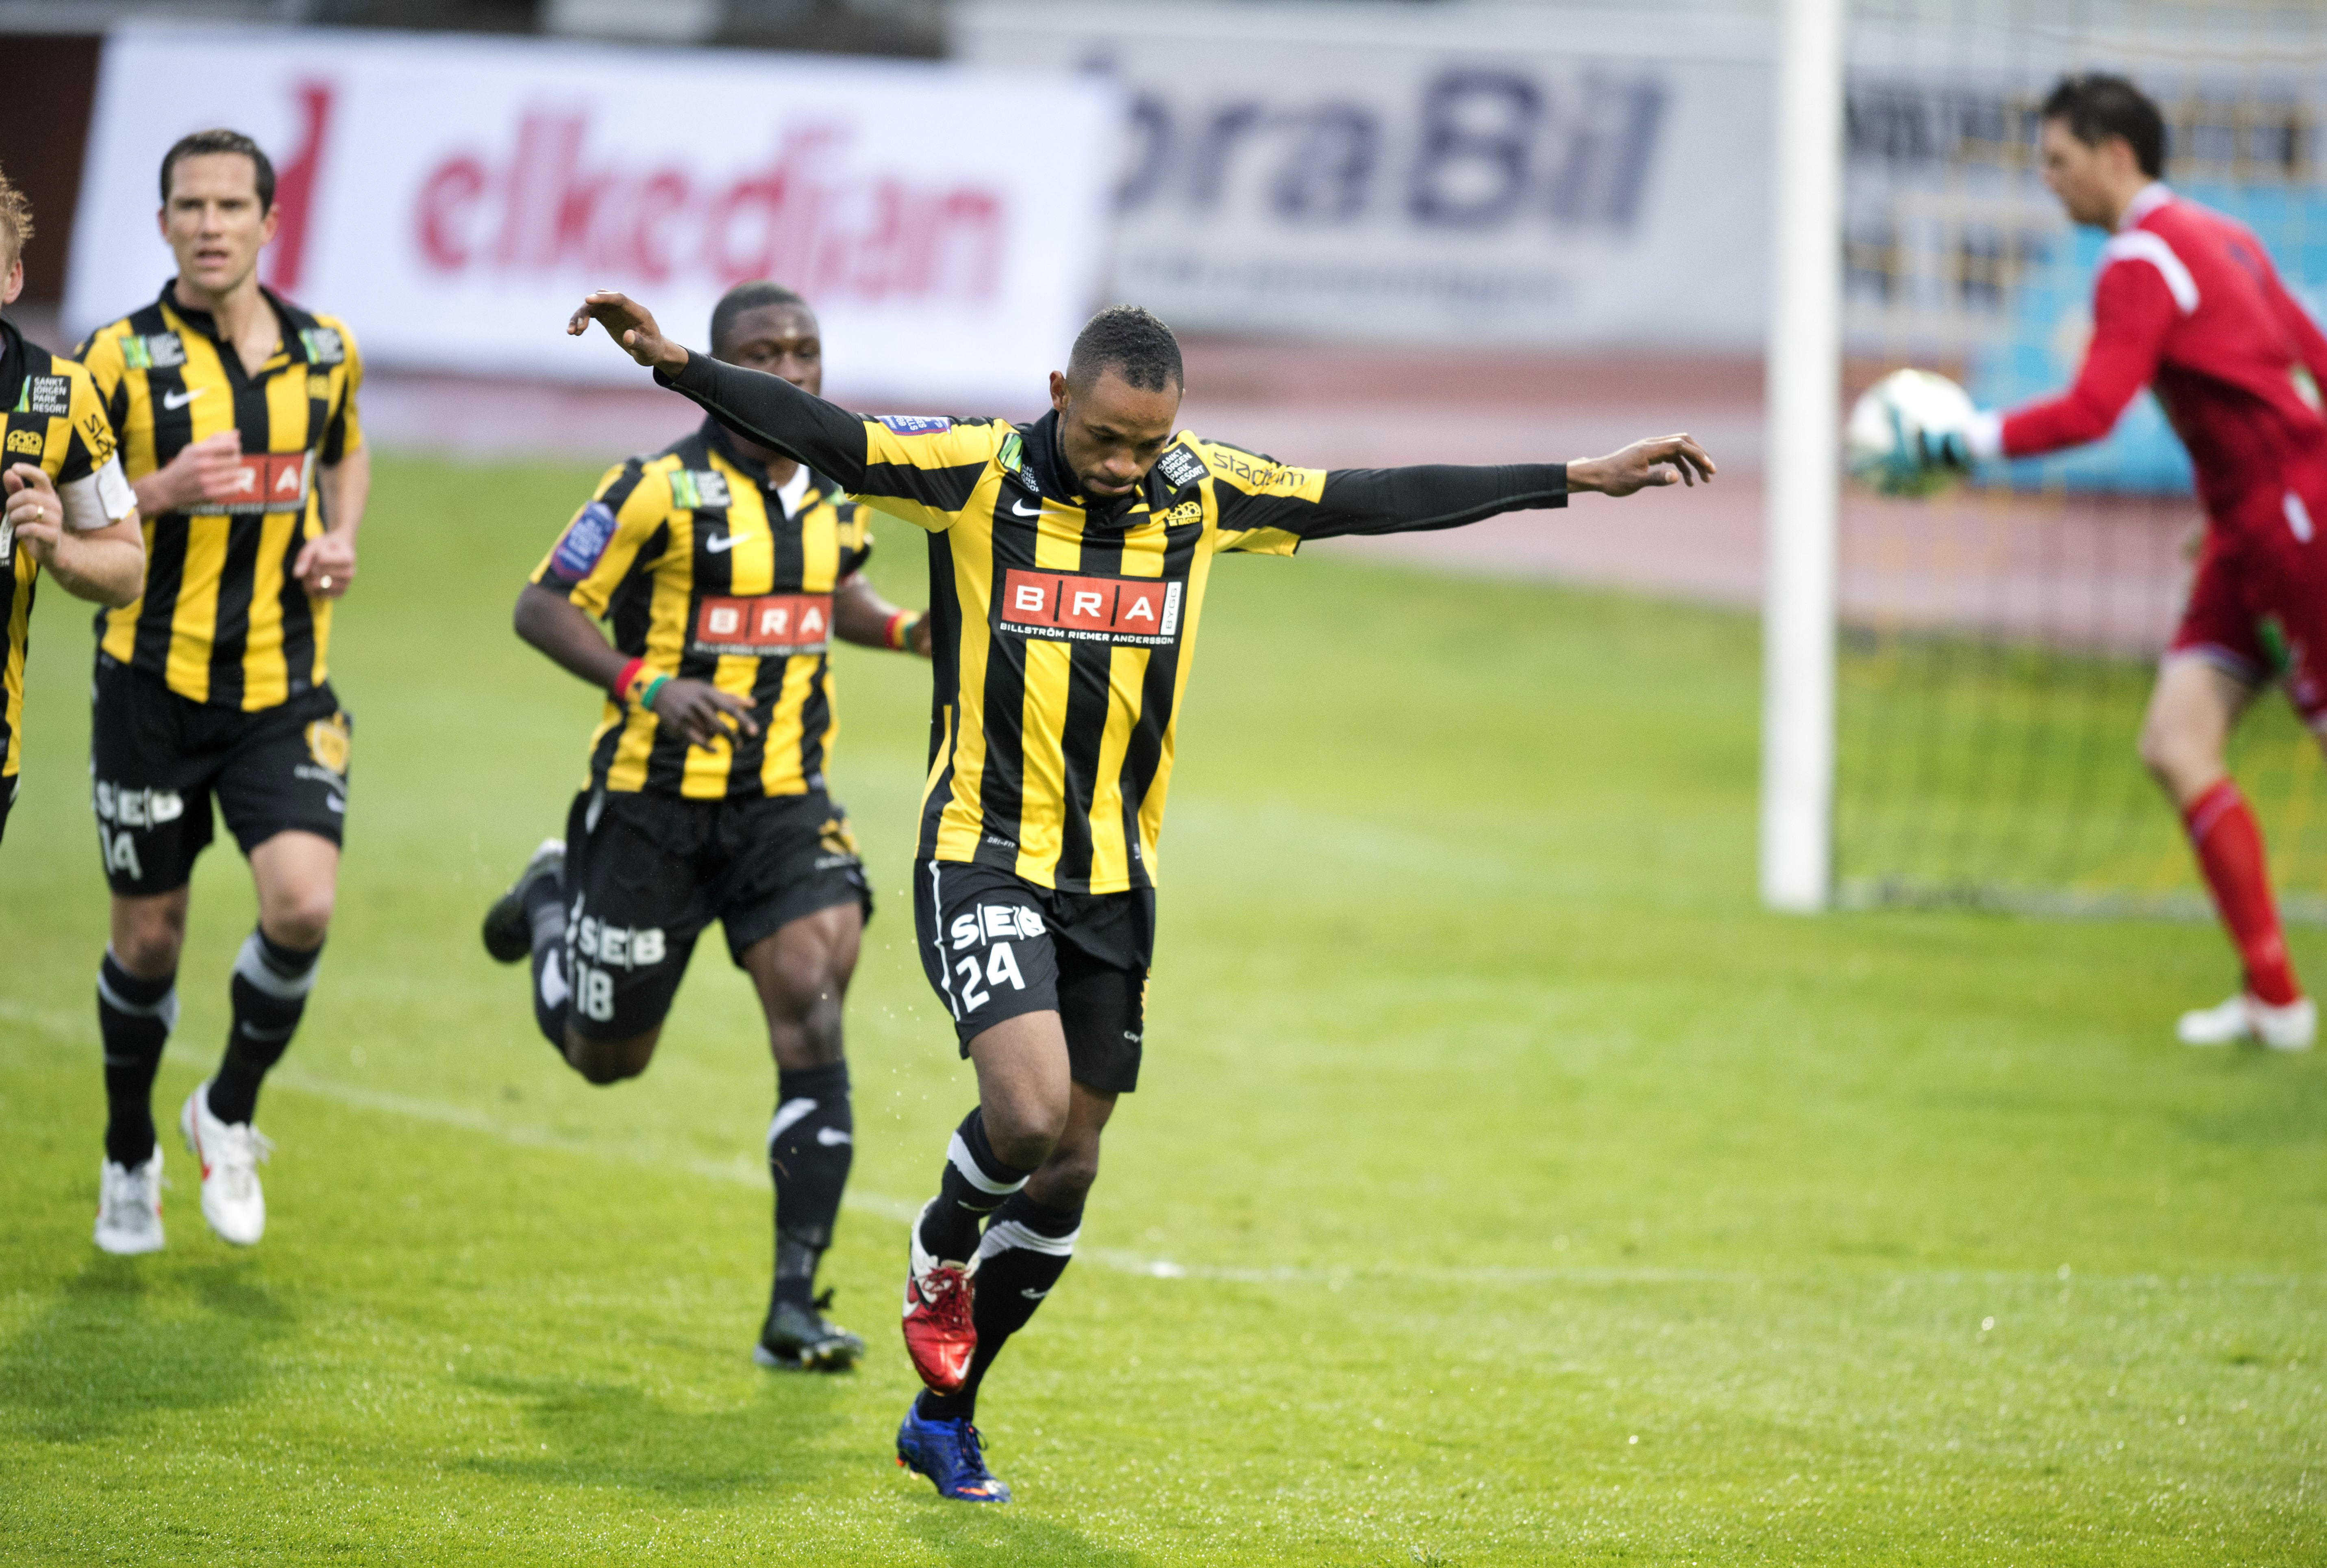 Allsvenskans nuvarande skyttekung Rene Makondele firar ett av sina två mål. Strax bakom springer skytteligatvåan Majeed Waris.